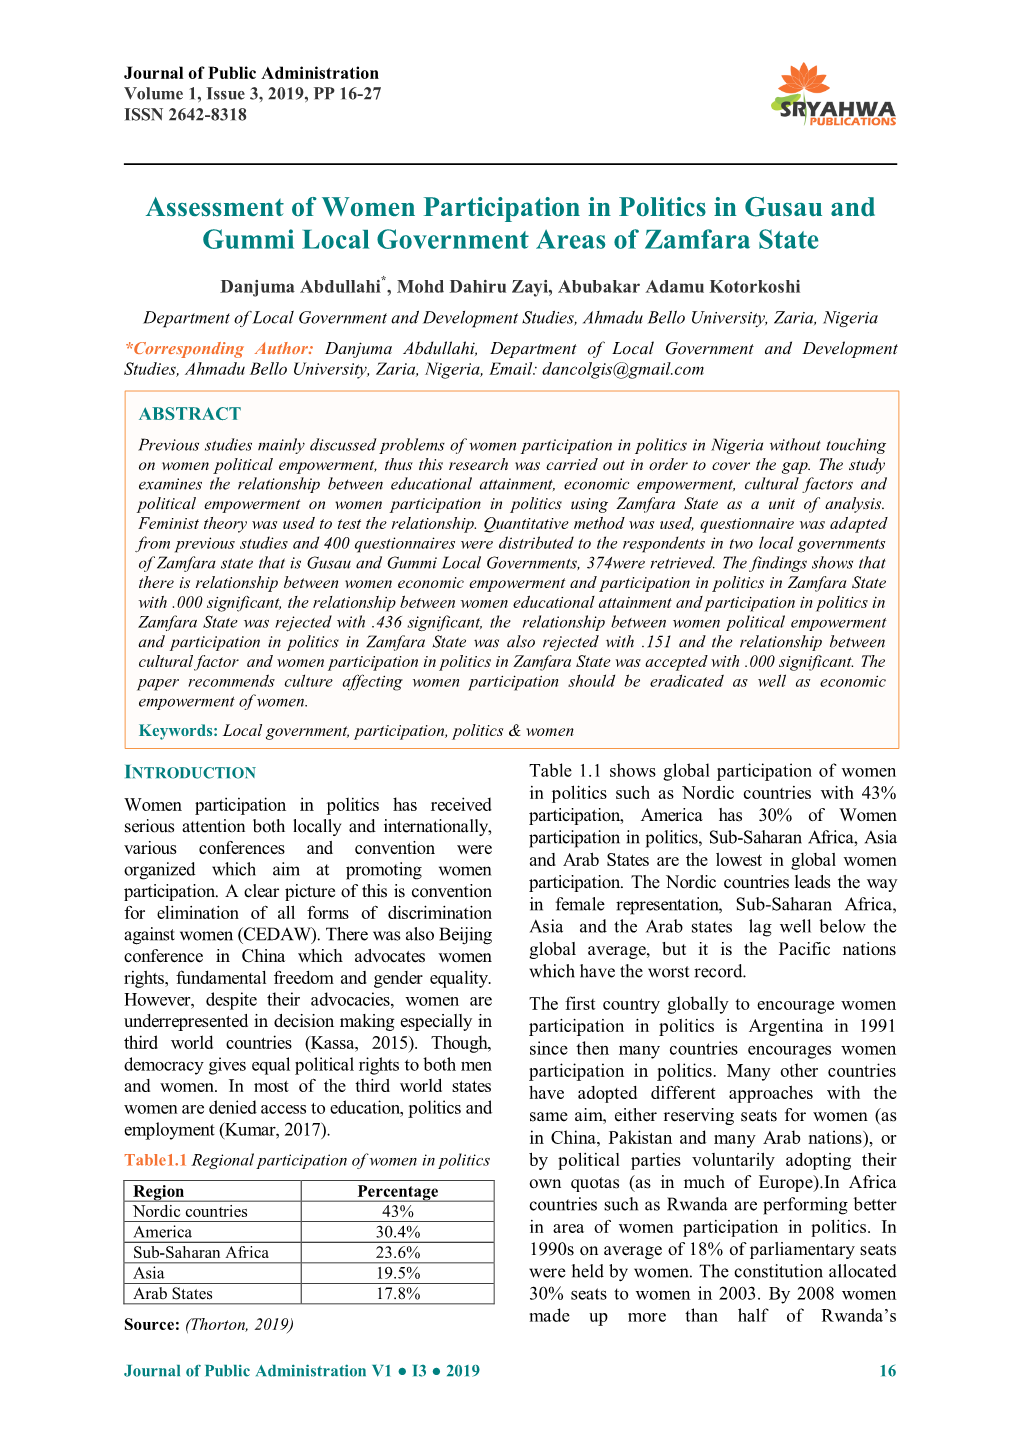 Assessment of Women Participation in Politics in Gusau and Gummi Local Government Areas of Zamfara State